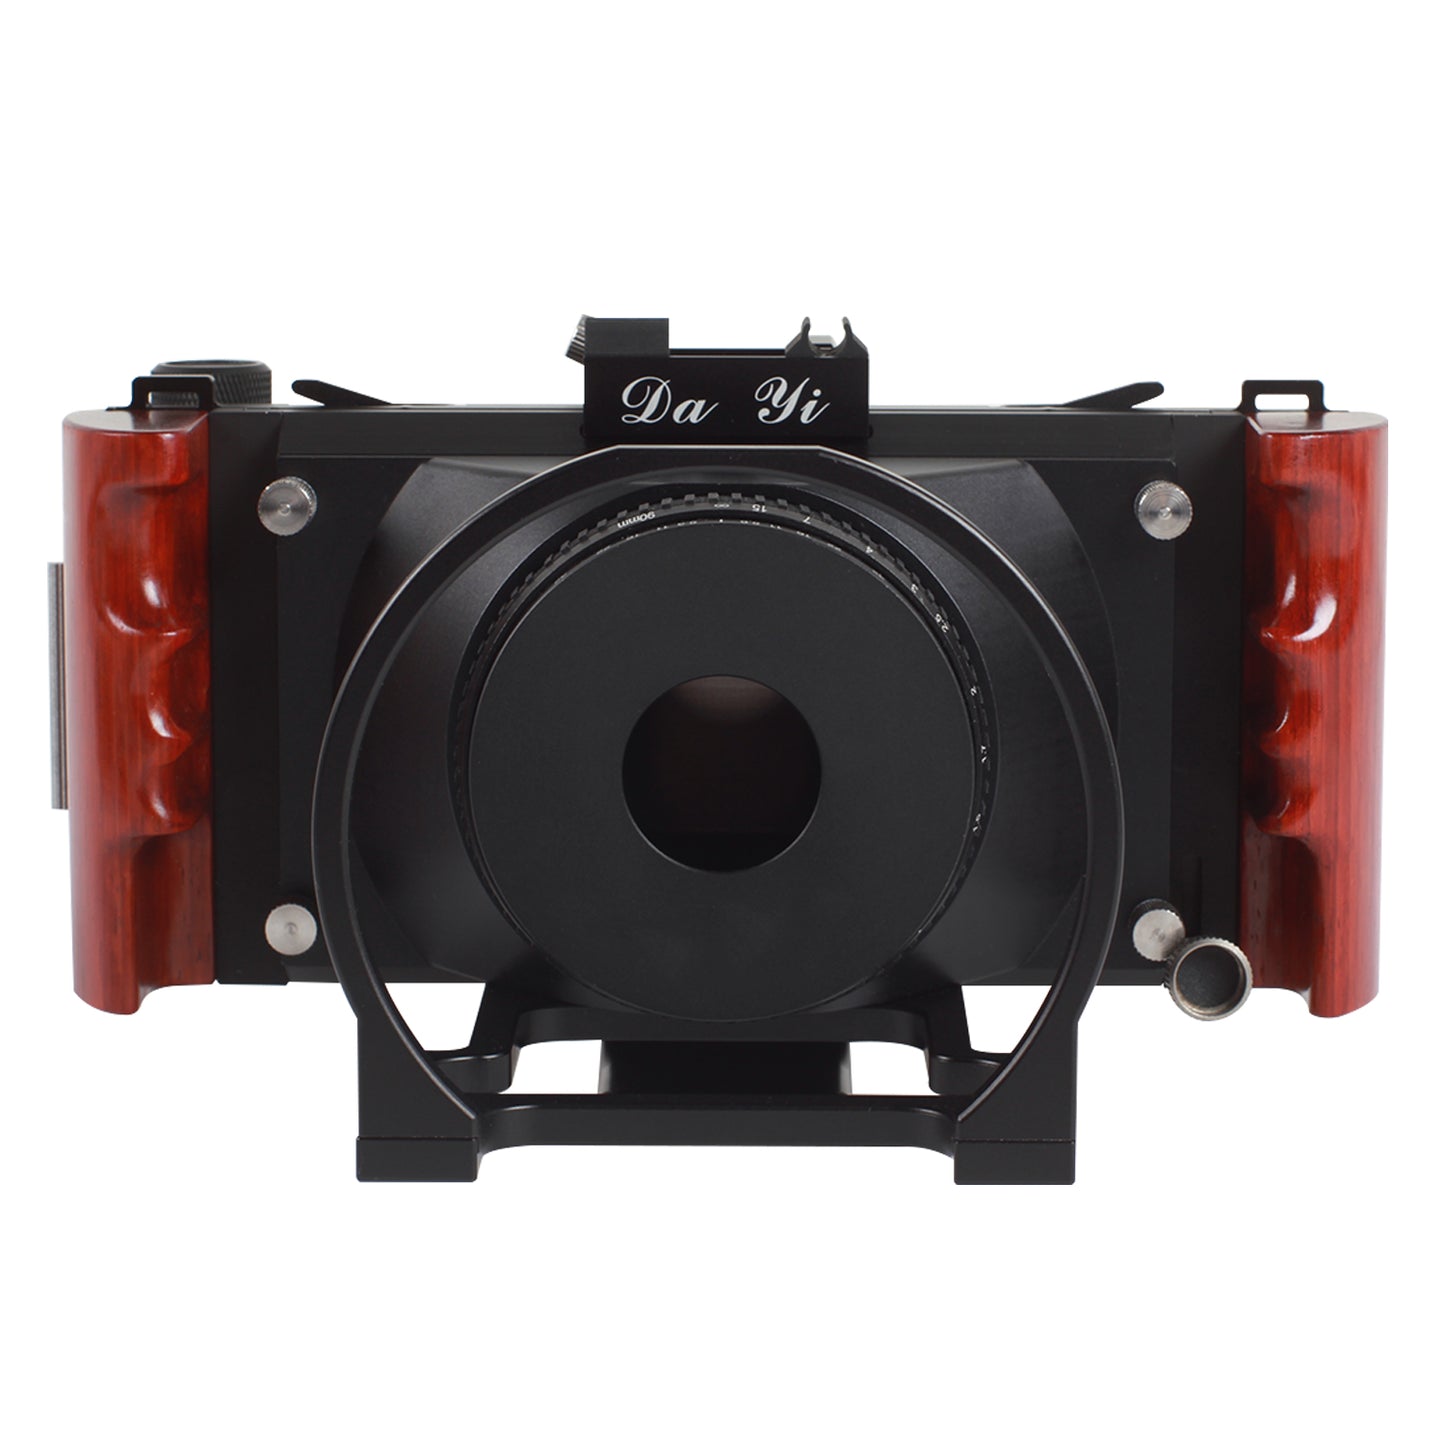 Nuova fotocamera professionale DAYI S-IIA 6x17 6x14 6x12 Panorama Shift multiformato